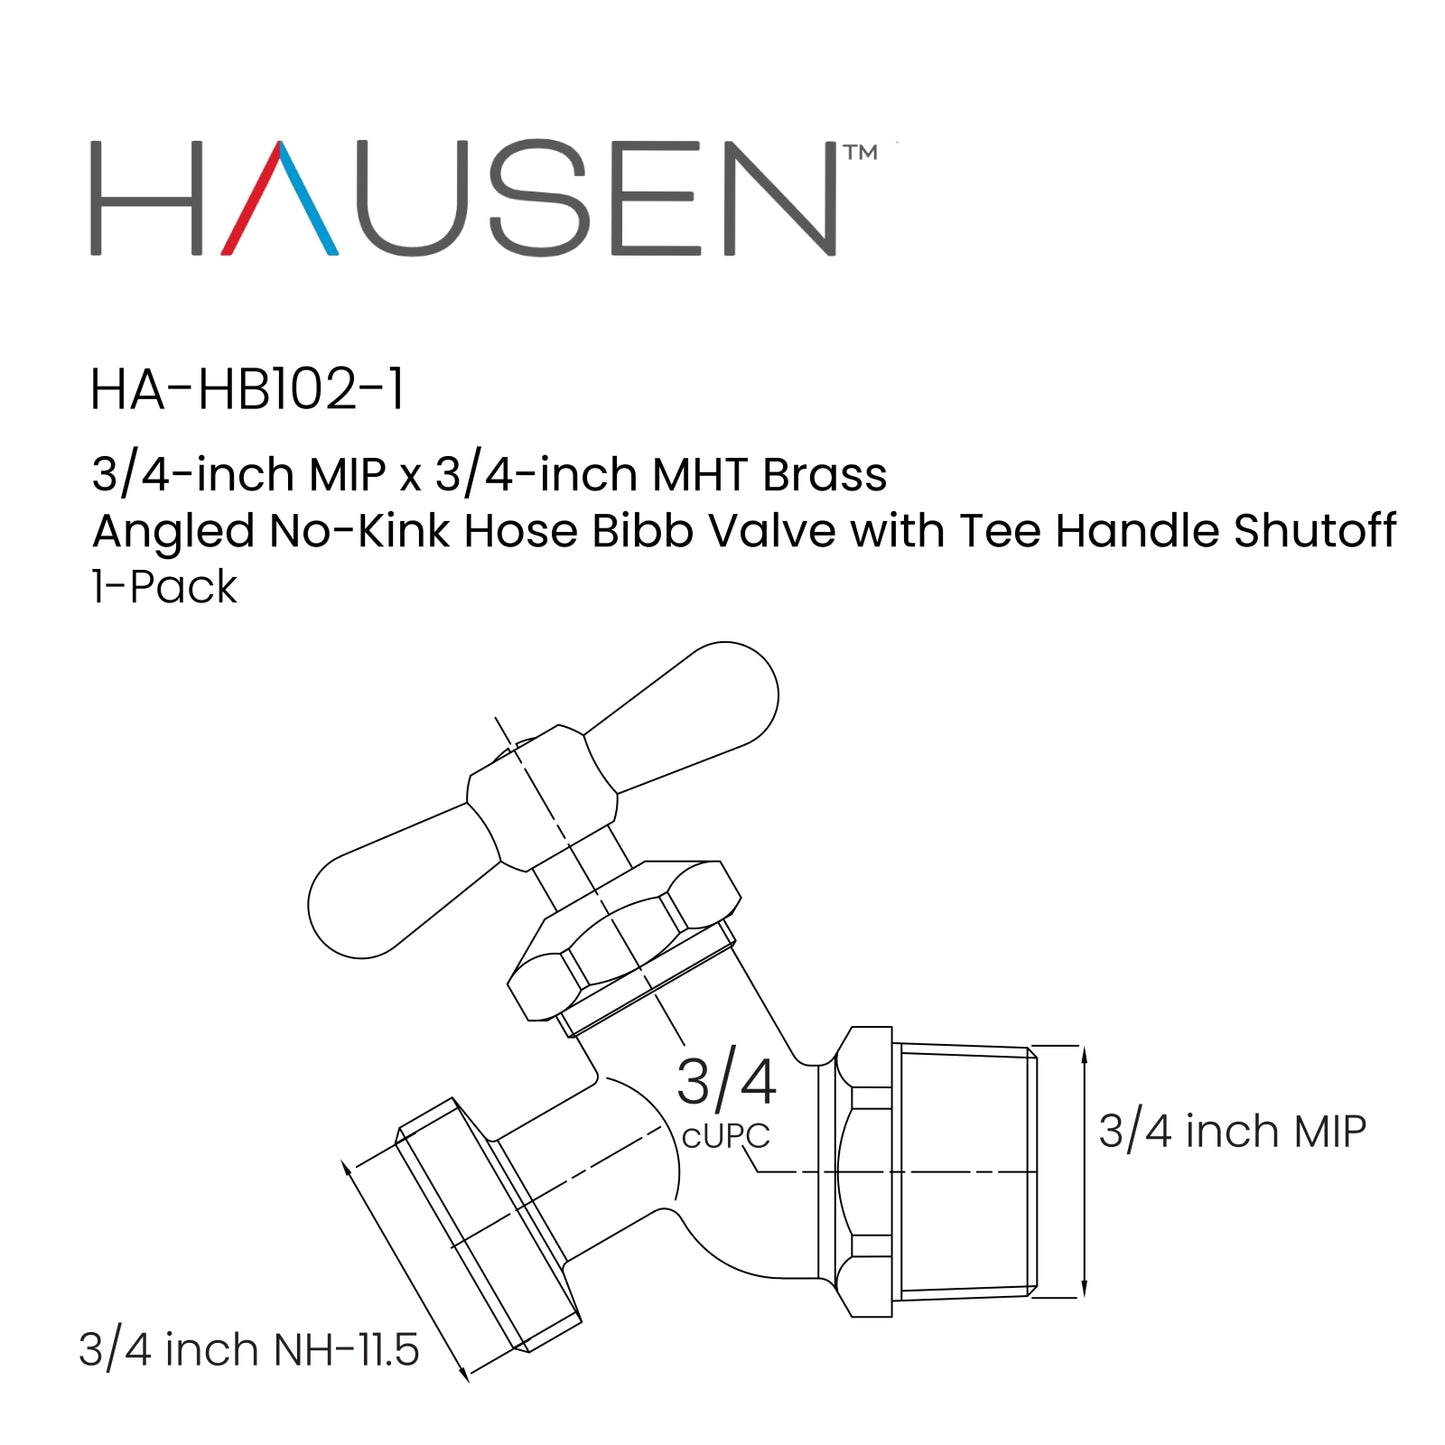 Hausen 3/4-inch MIP x 3/4-inch MHT Brass Angled No-Kink Hose Bibb Valve with Tee Handle Shutoff, 1-Pack